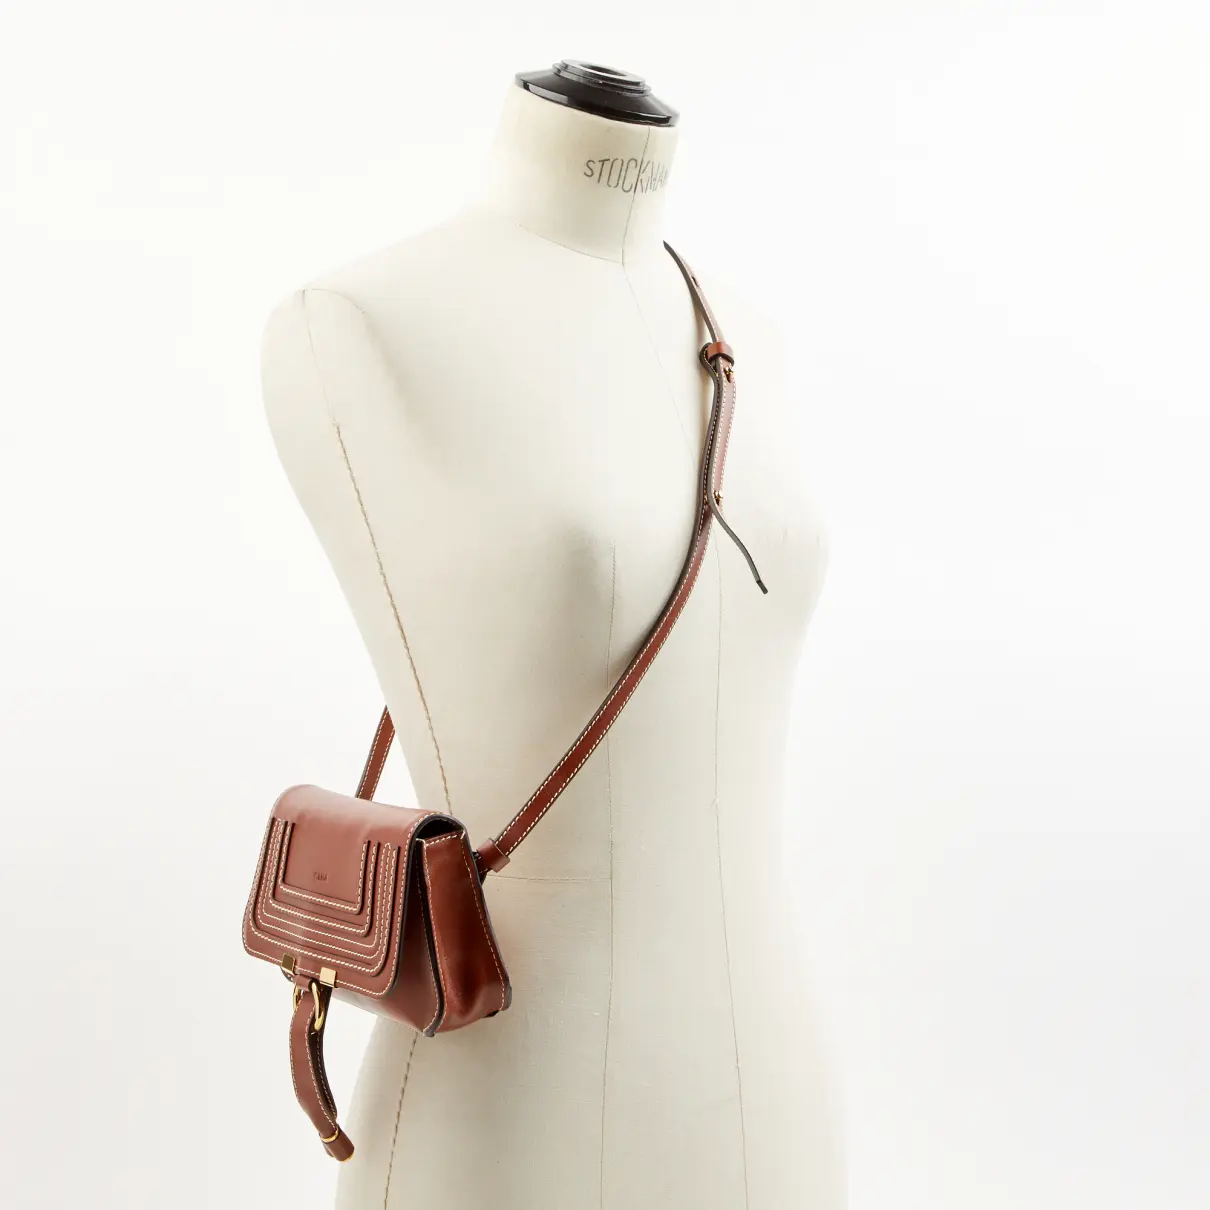 Buy Chloé Marcie leather handbag online